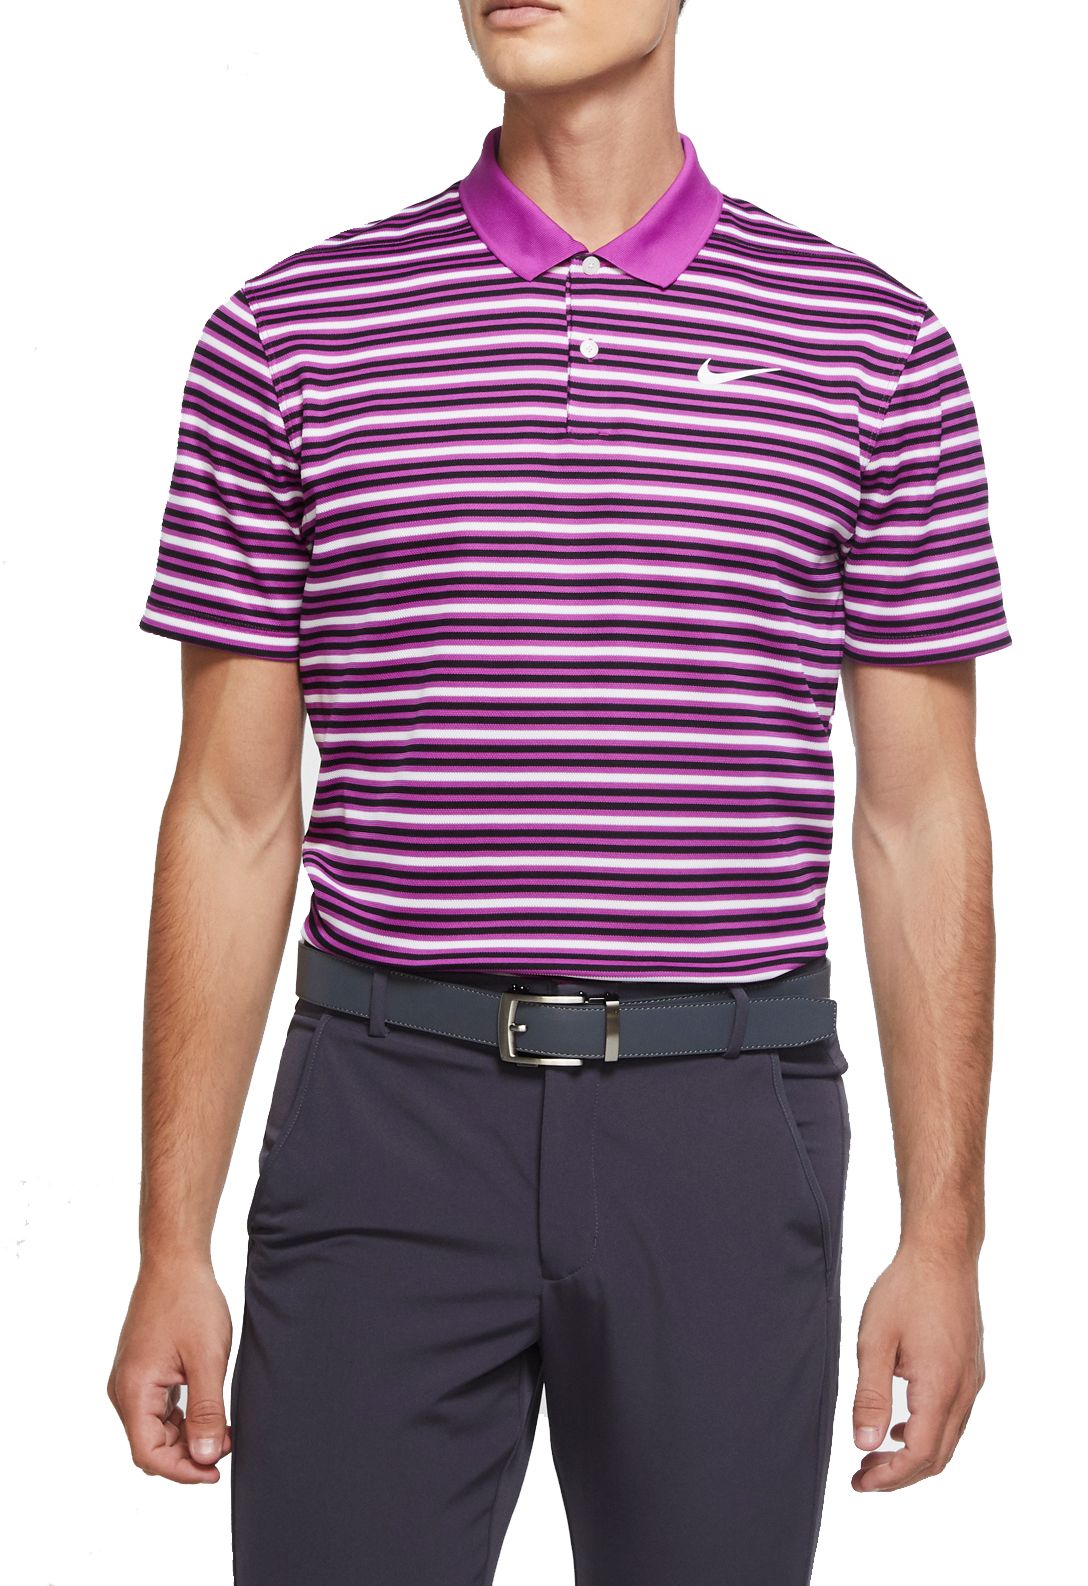 nike striped golf shirts